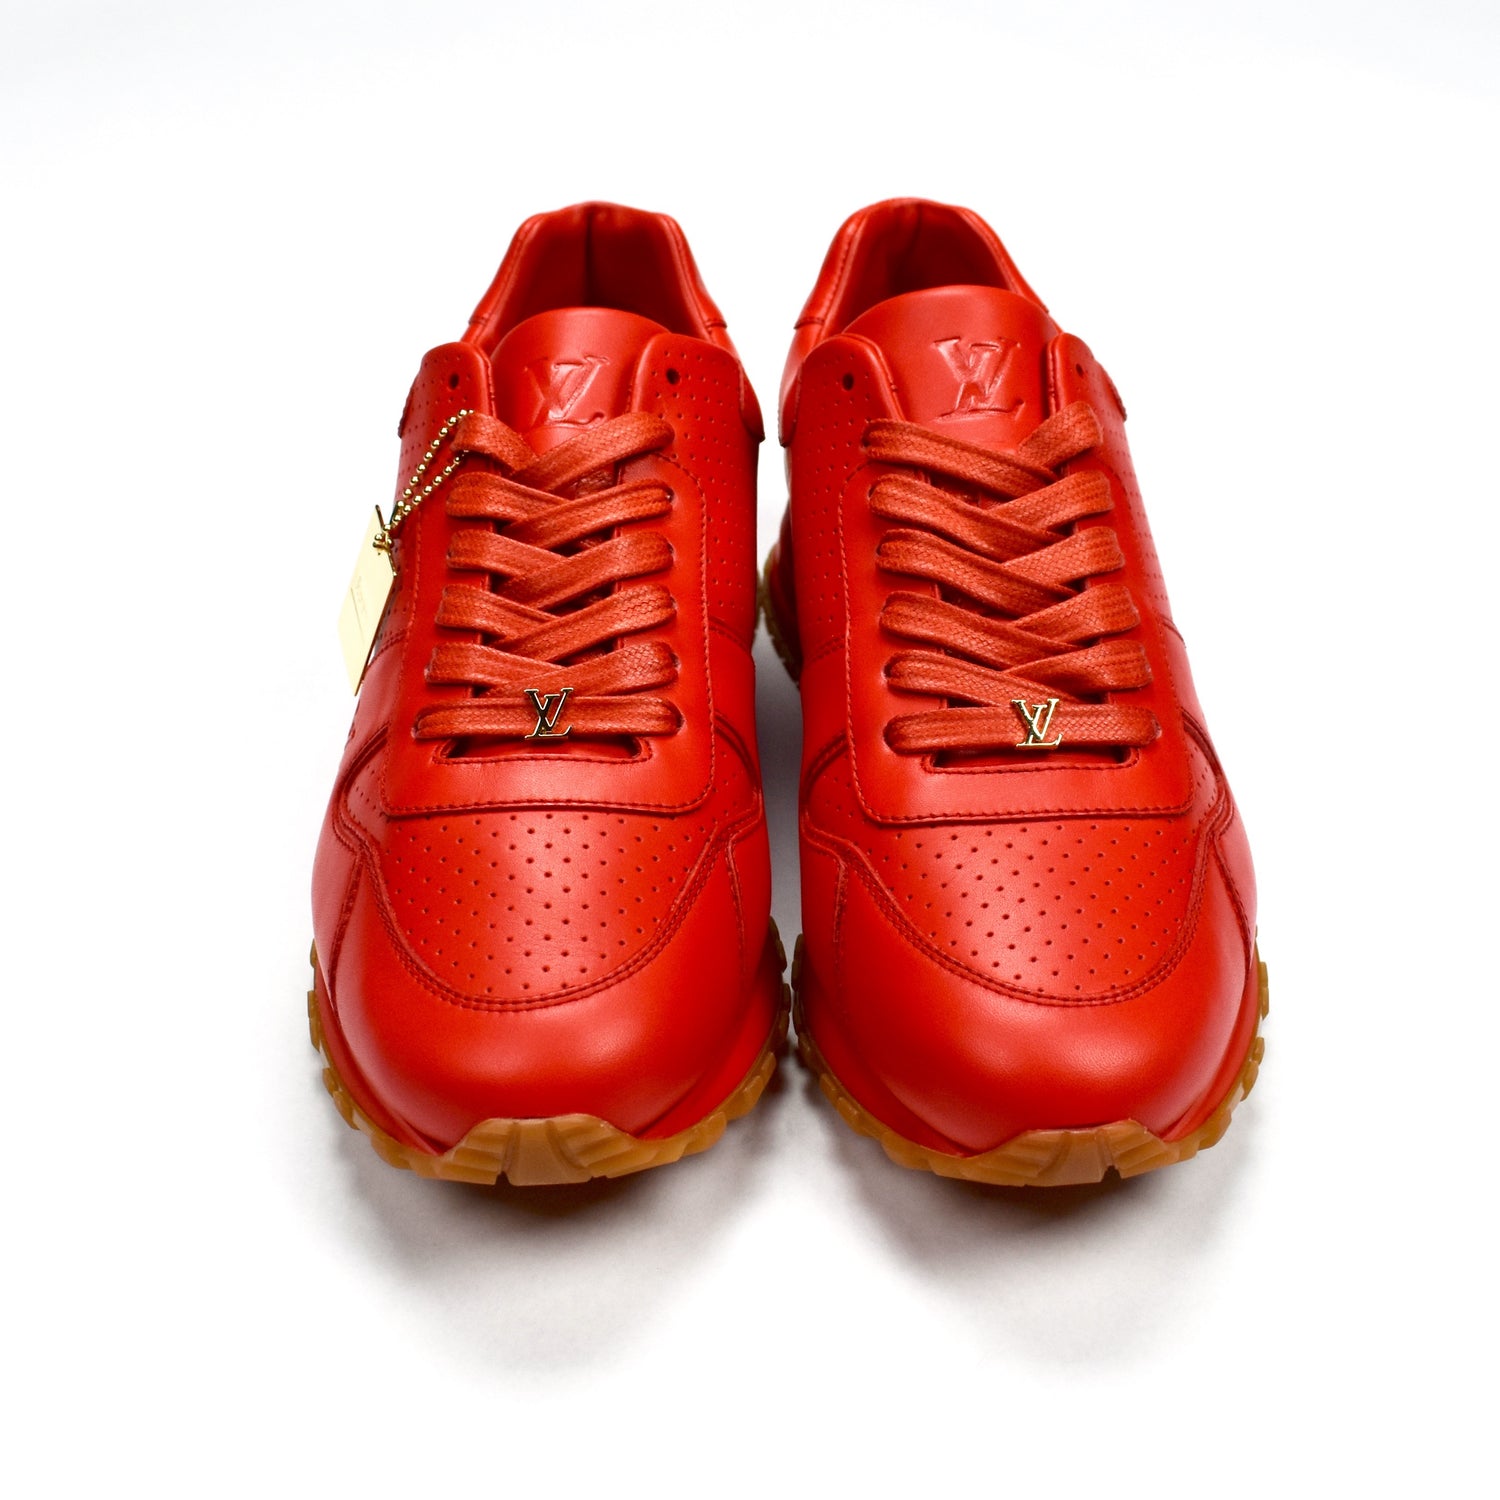 Louis Vuitton Supreme Red Air Jordan 13 Sneaker Shoes - LIMITED EDITION